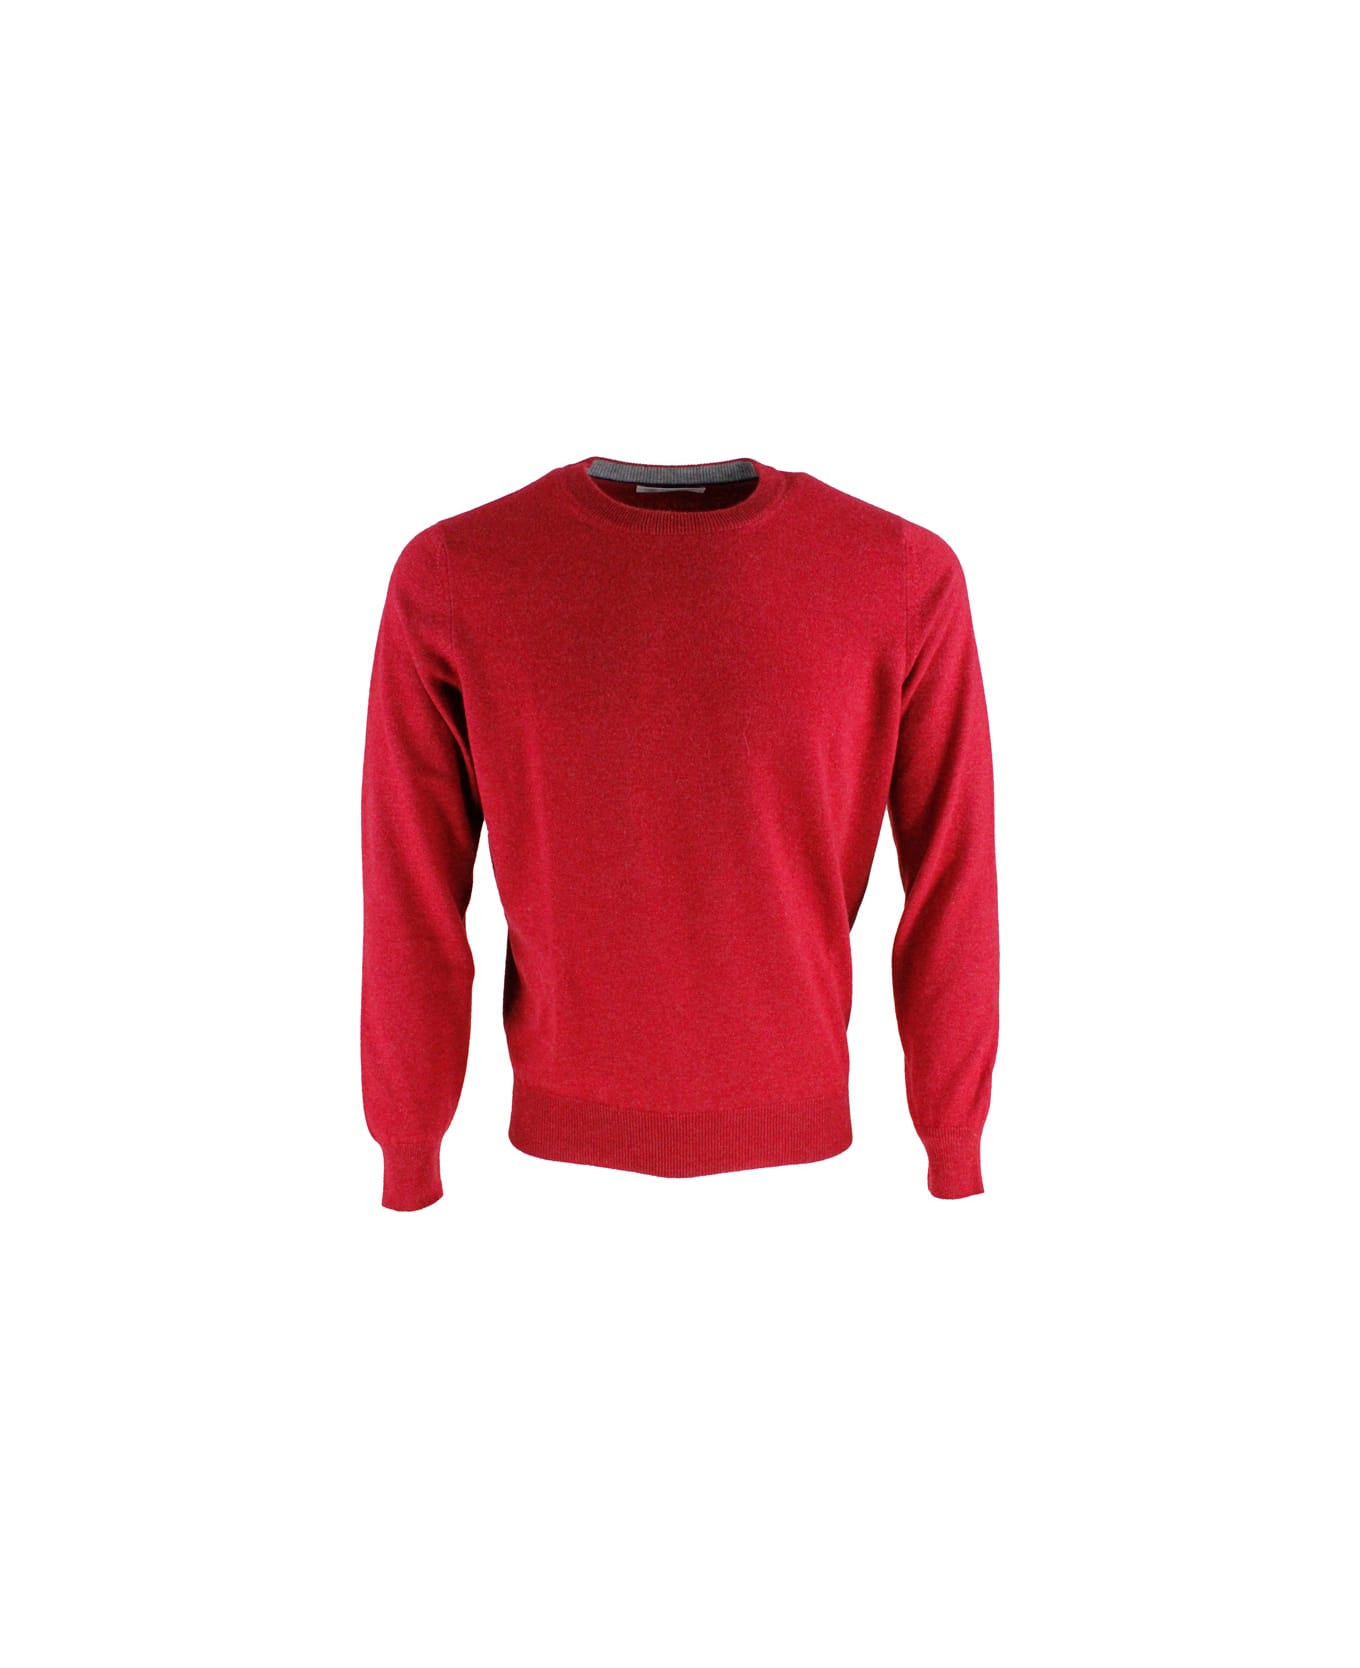 Brunello Cucinelli Cashmere Crewneck Sweater With Contrasting Profile - Red